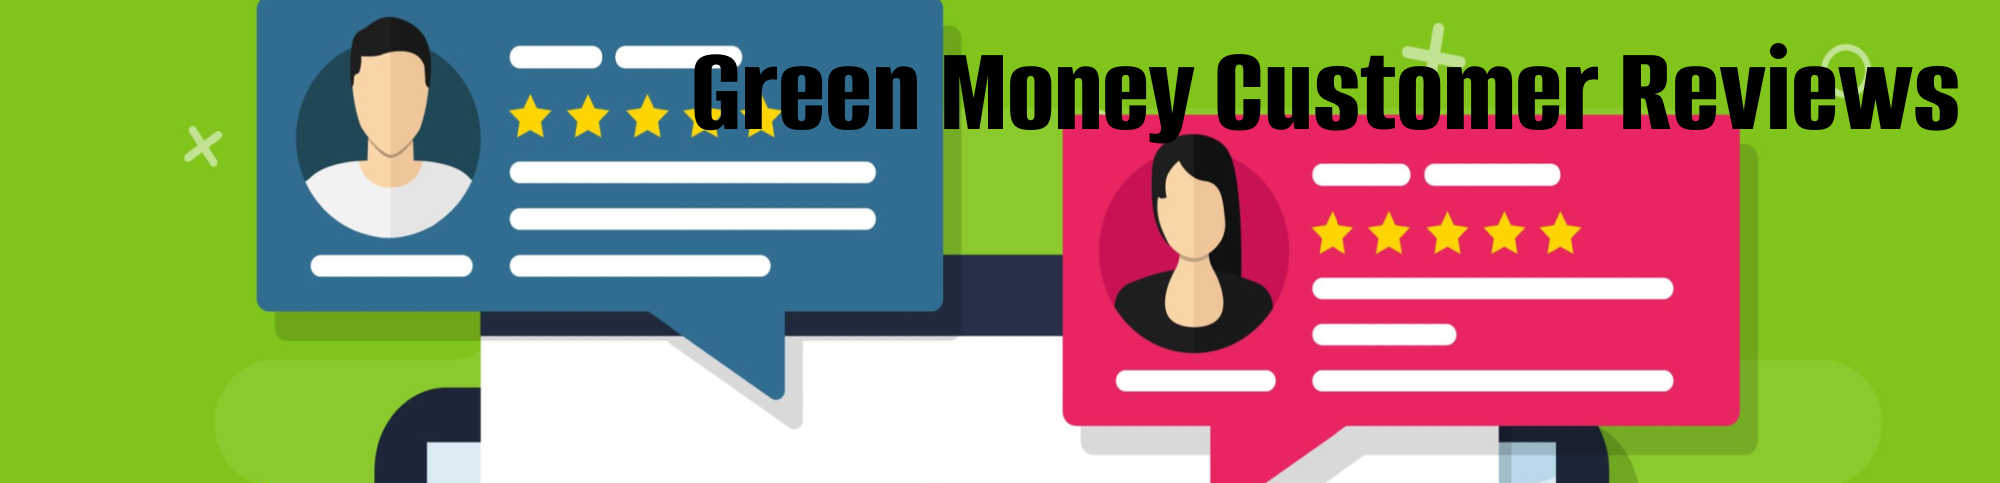 image-of-green-money-customer-reviews